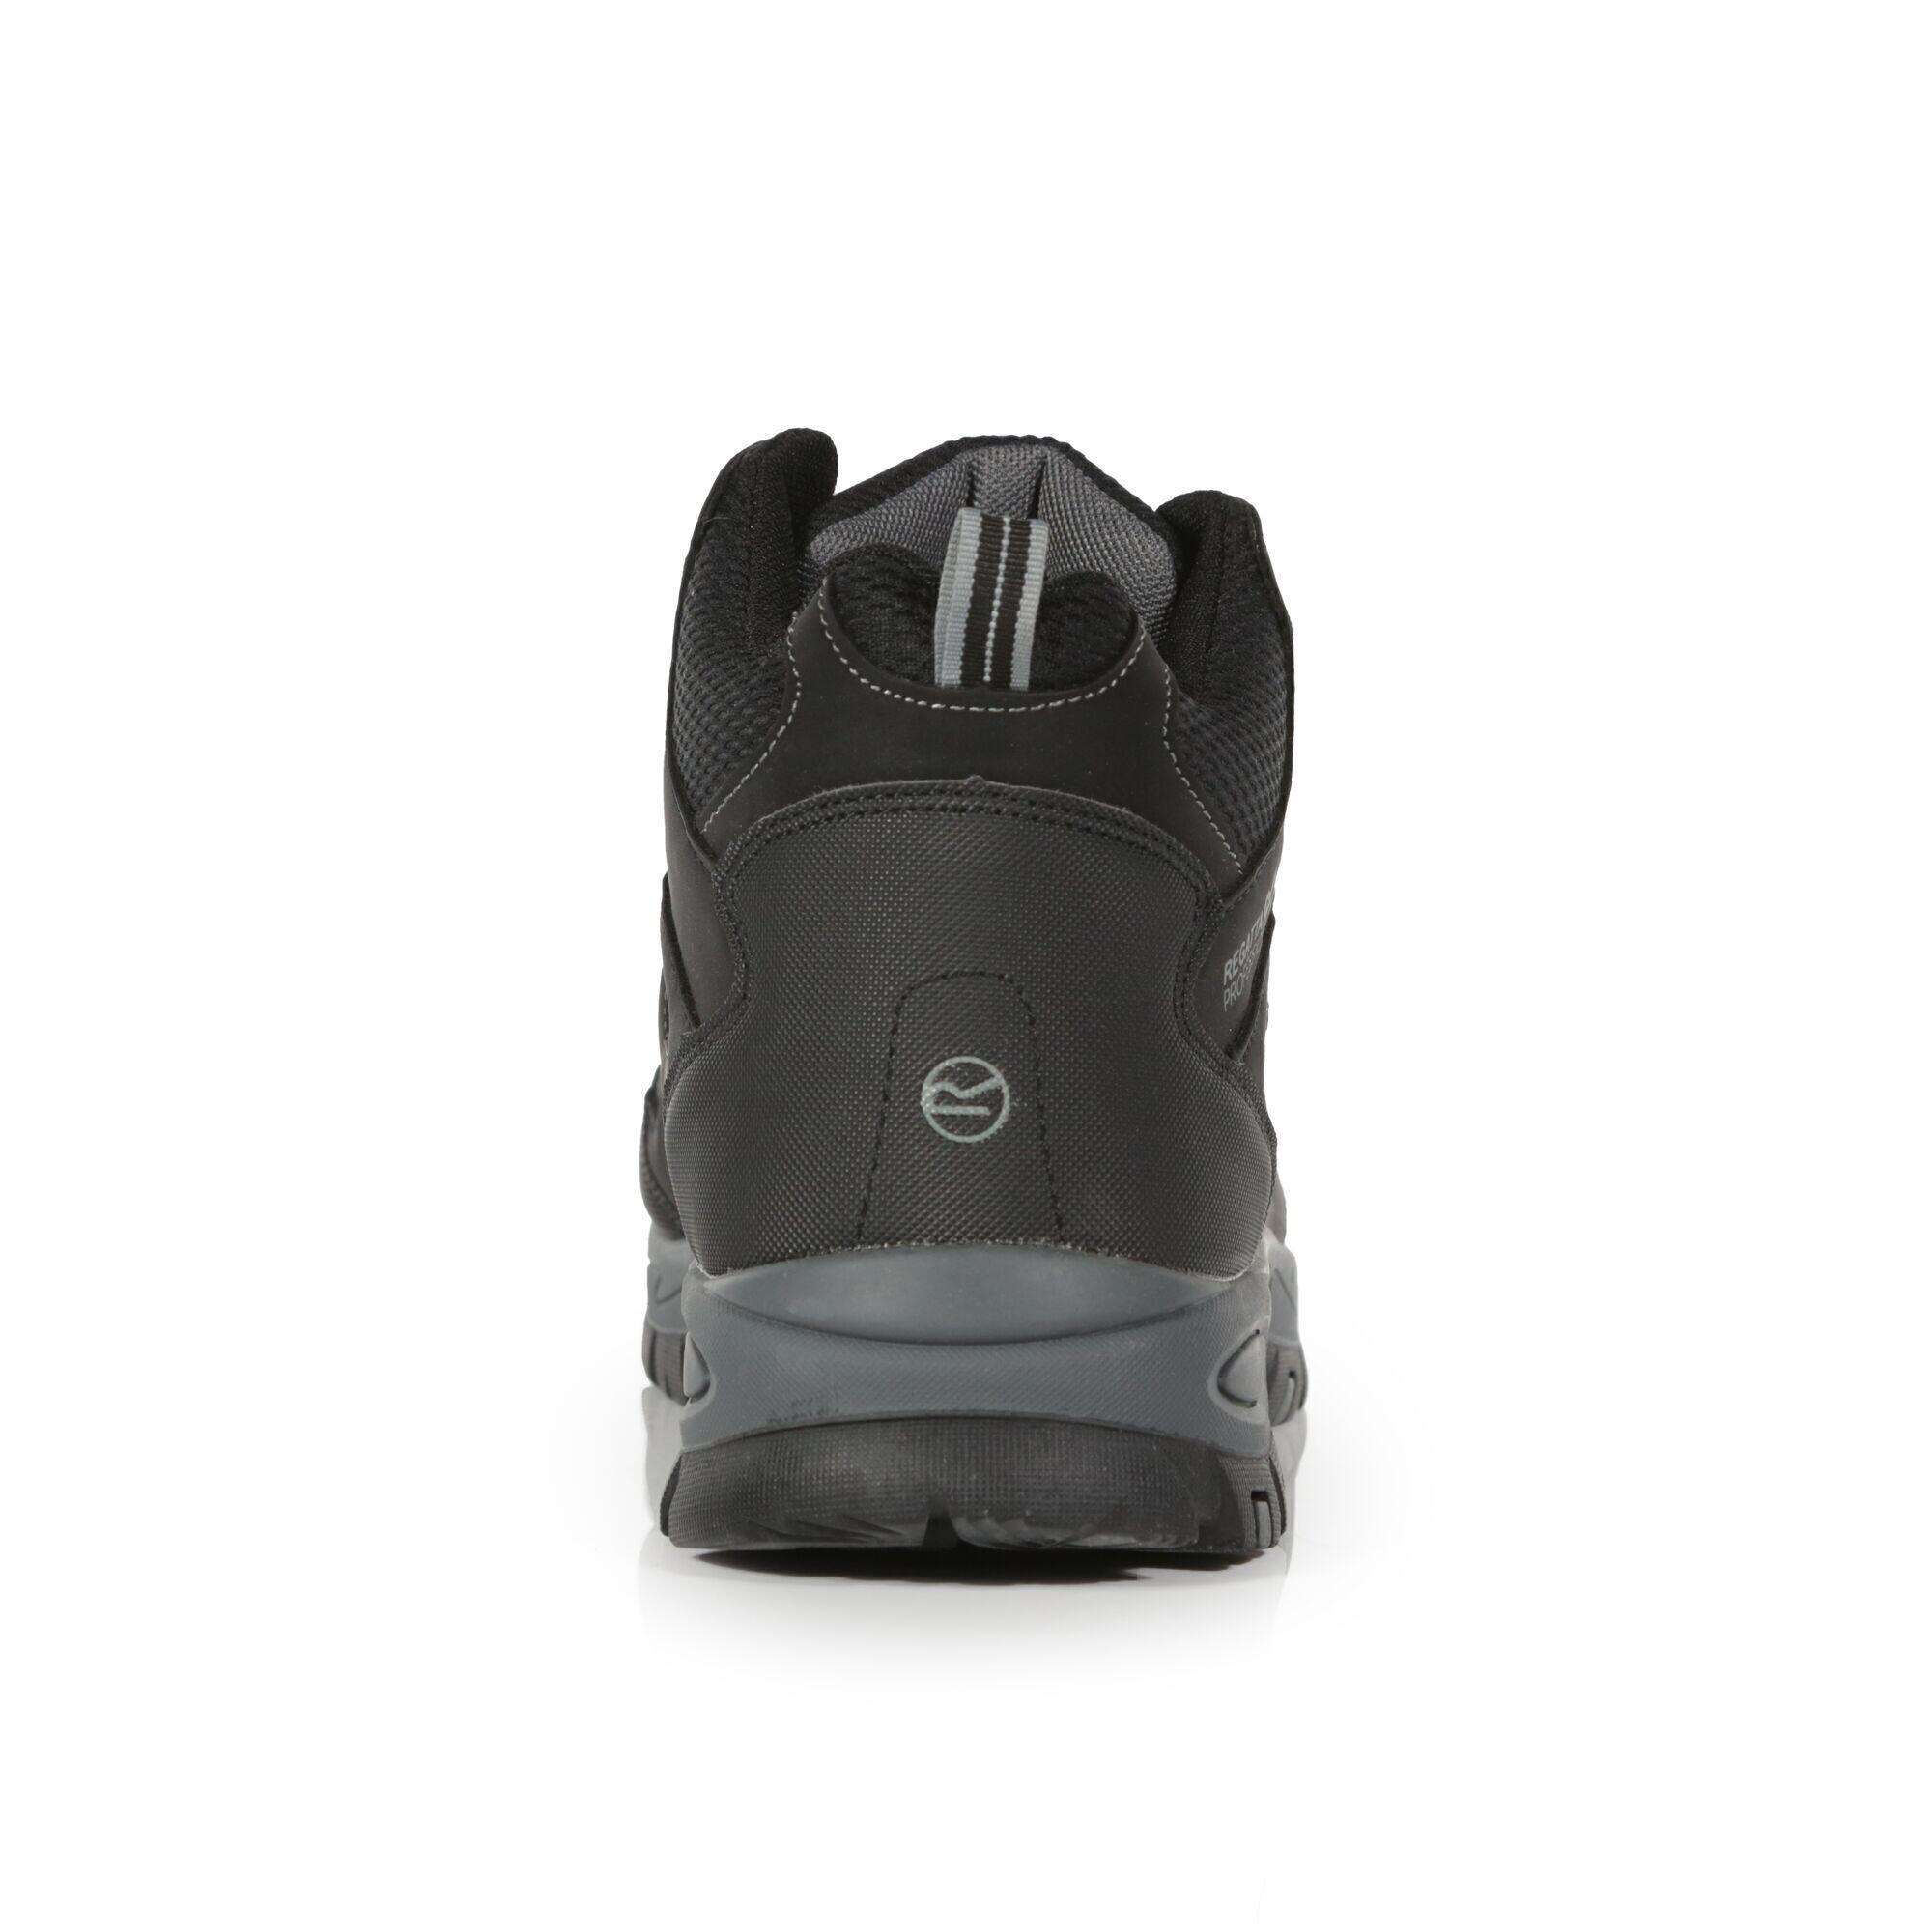 Mens Mudstone Safety Boots (Black/Granite) 2/5